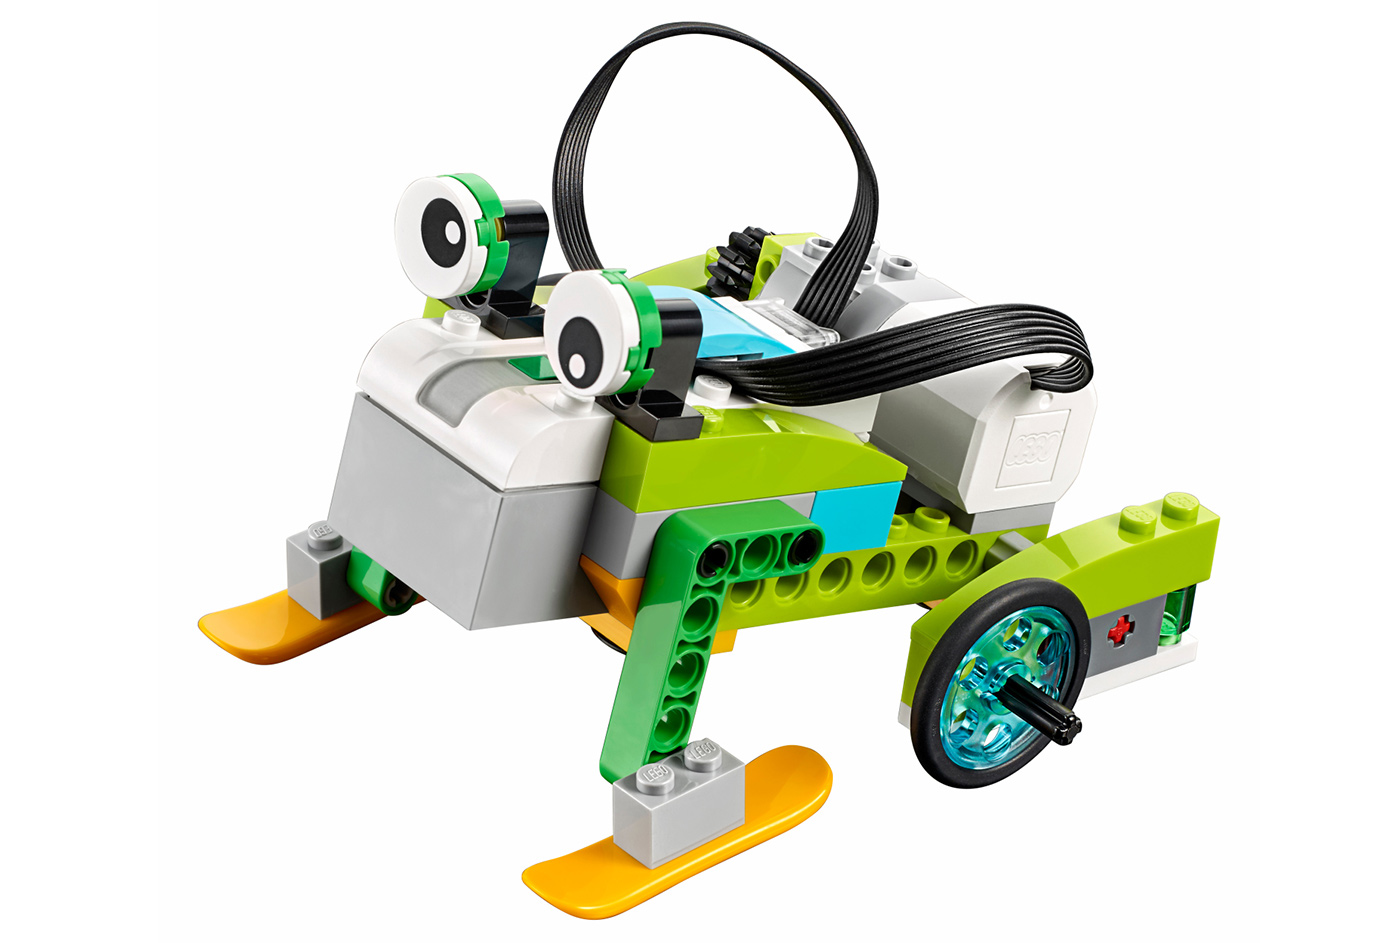 Lego's WeDo 2.0 gives kids a crash 